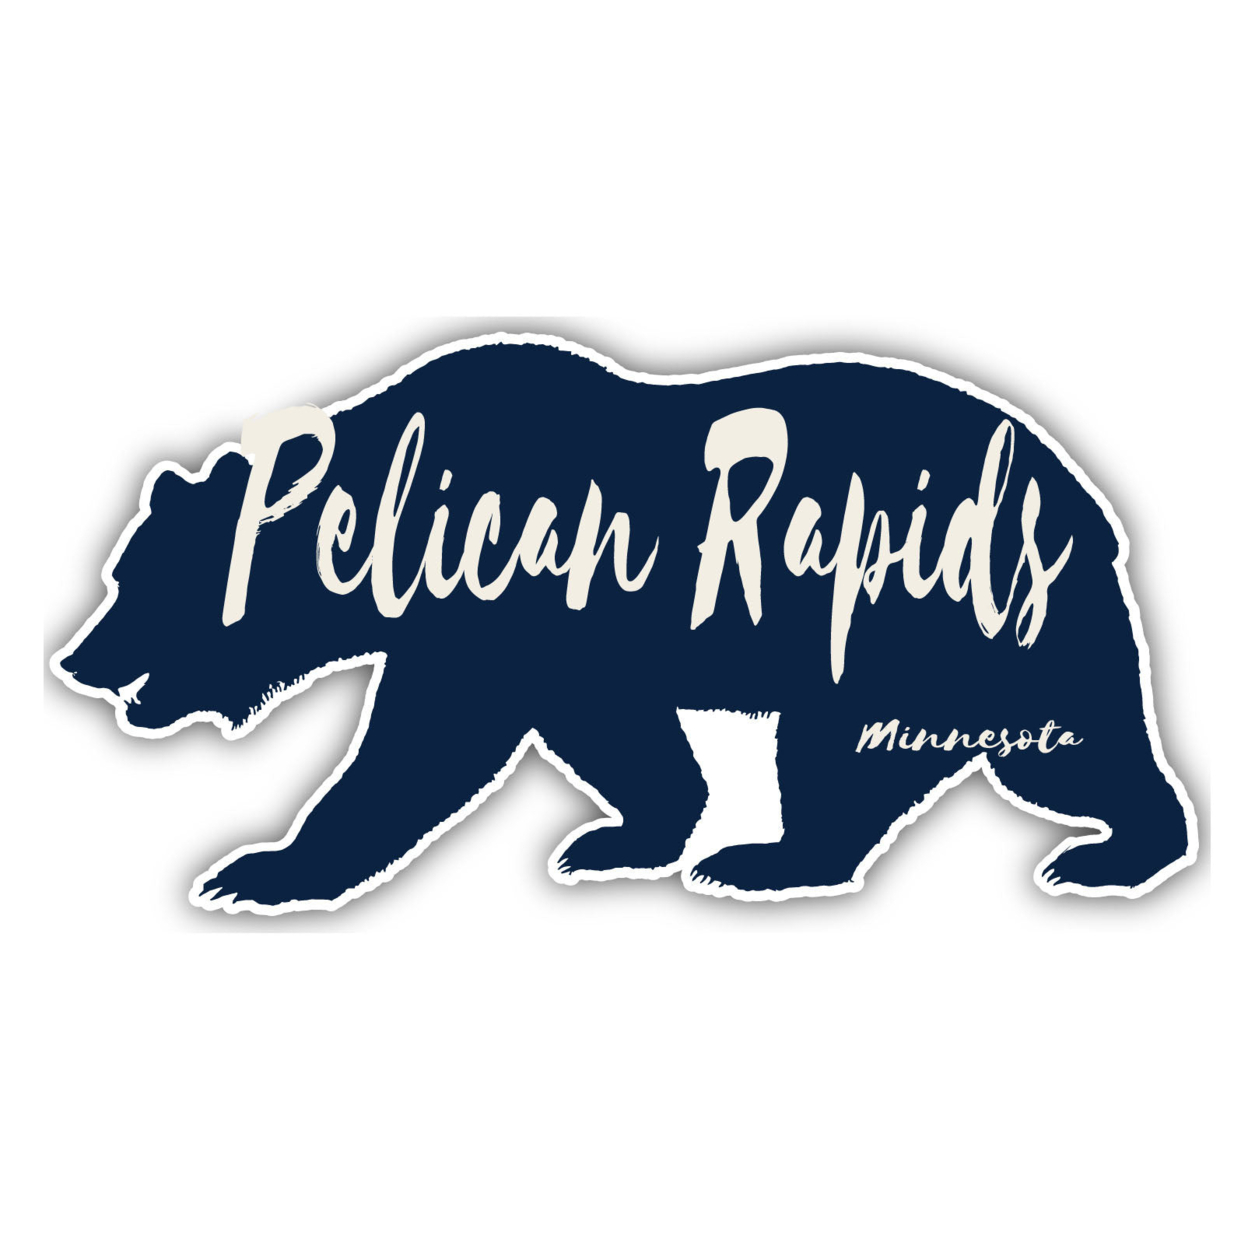 Pelican Rapids Minnesota Souvenir Decorative Stickers (Choose Theme And Size) - Single Unit, 2-Inch, Tent